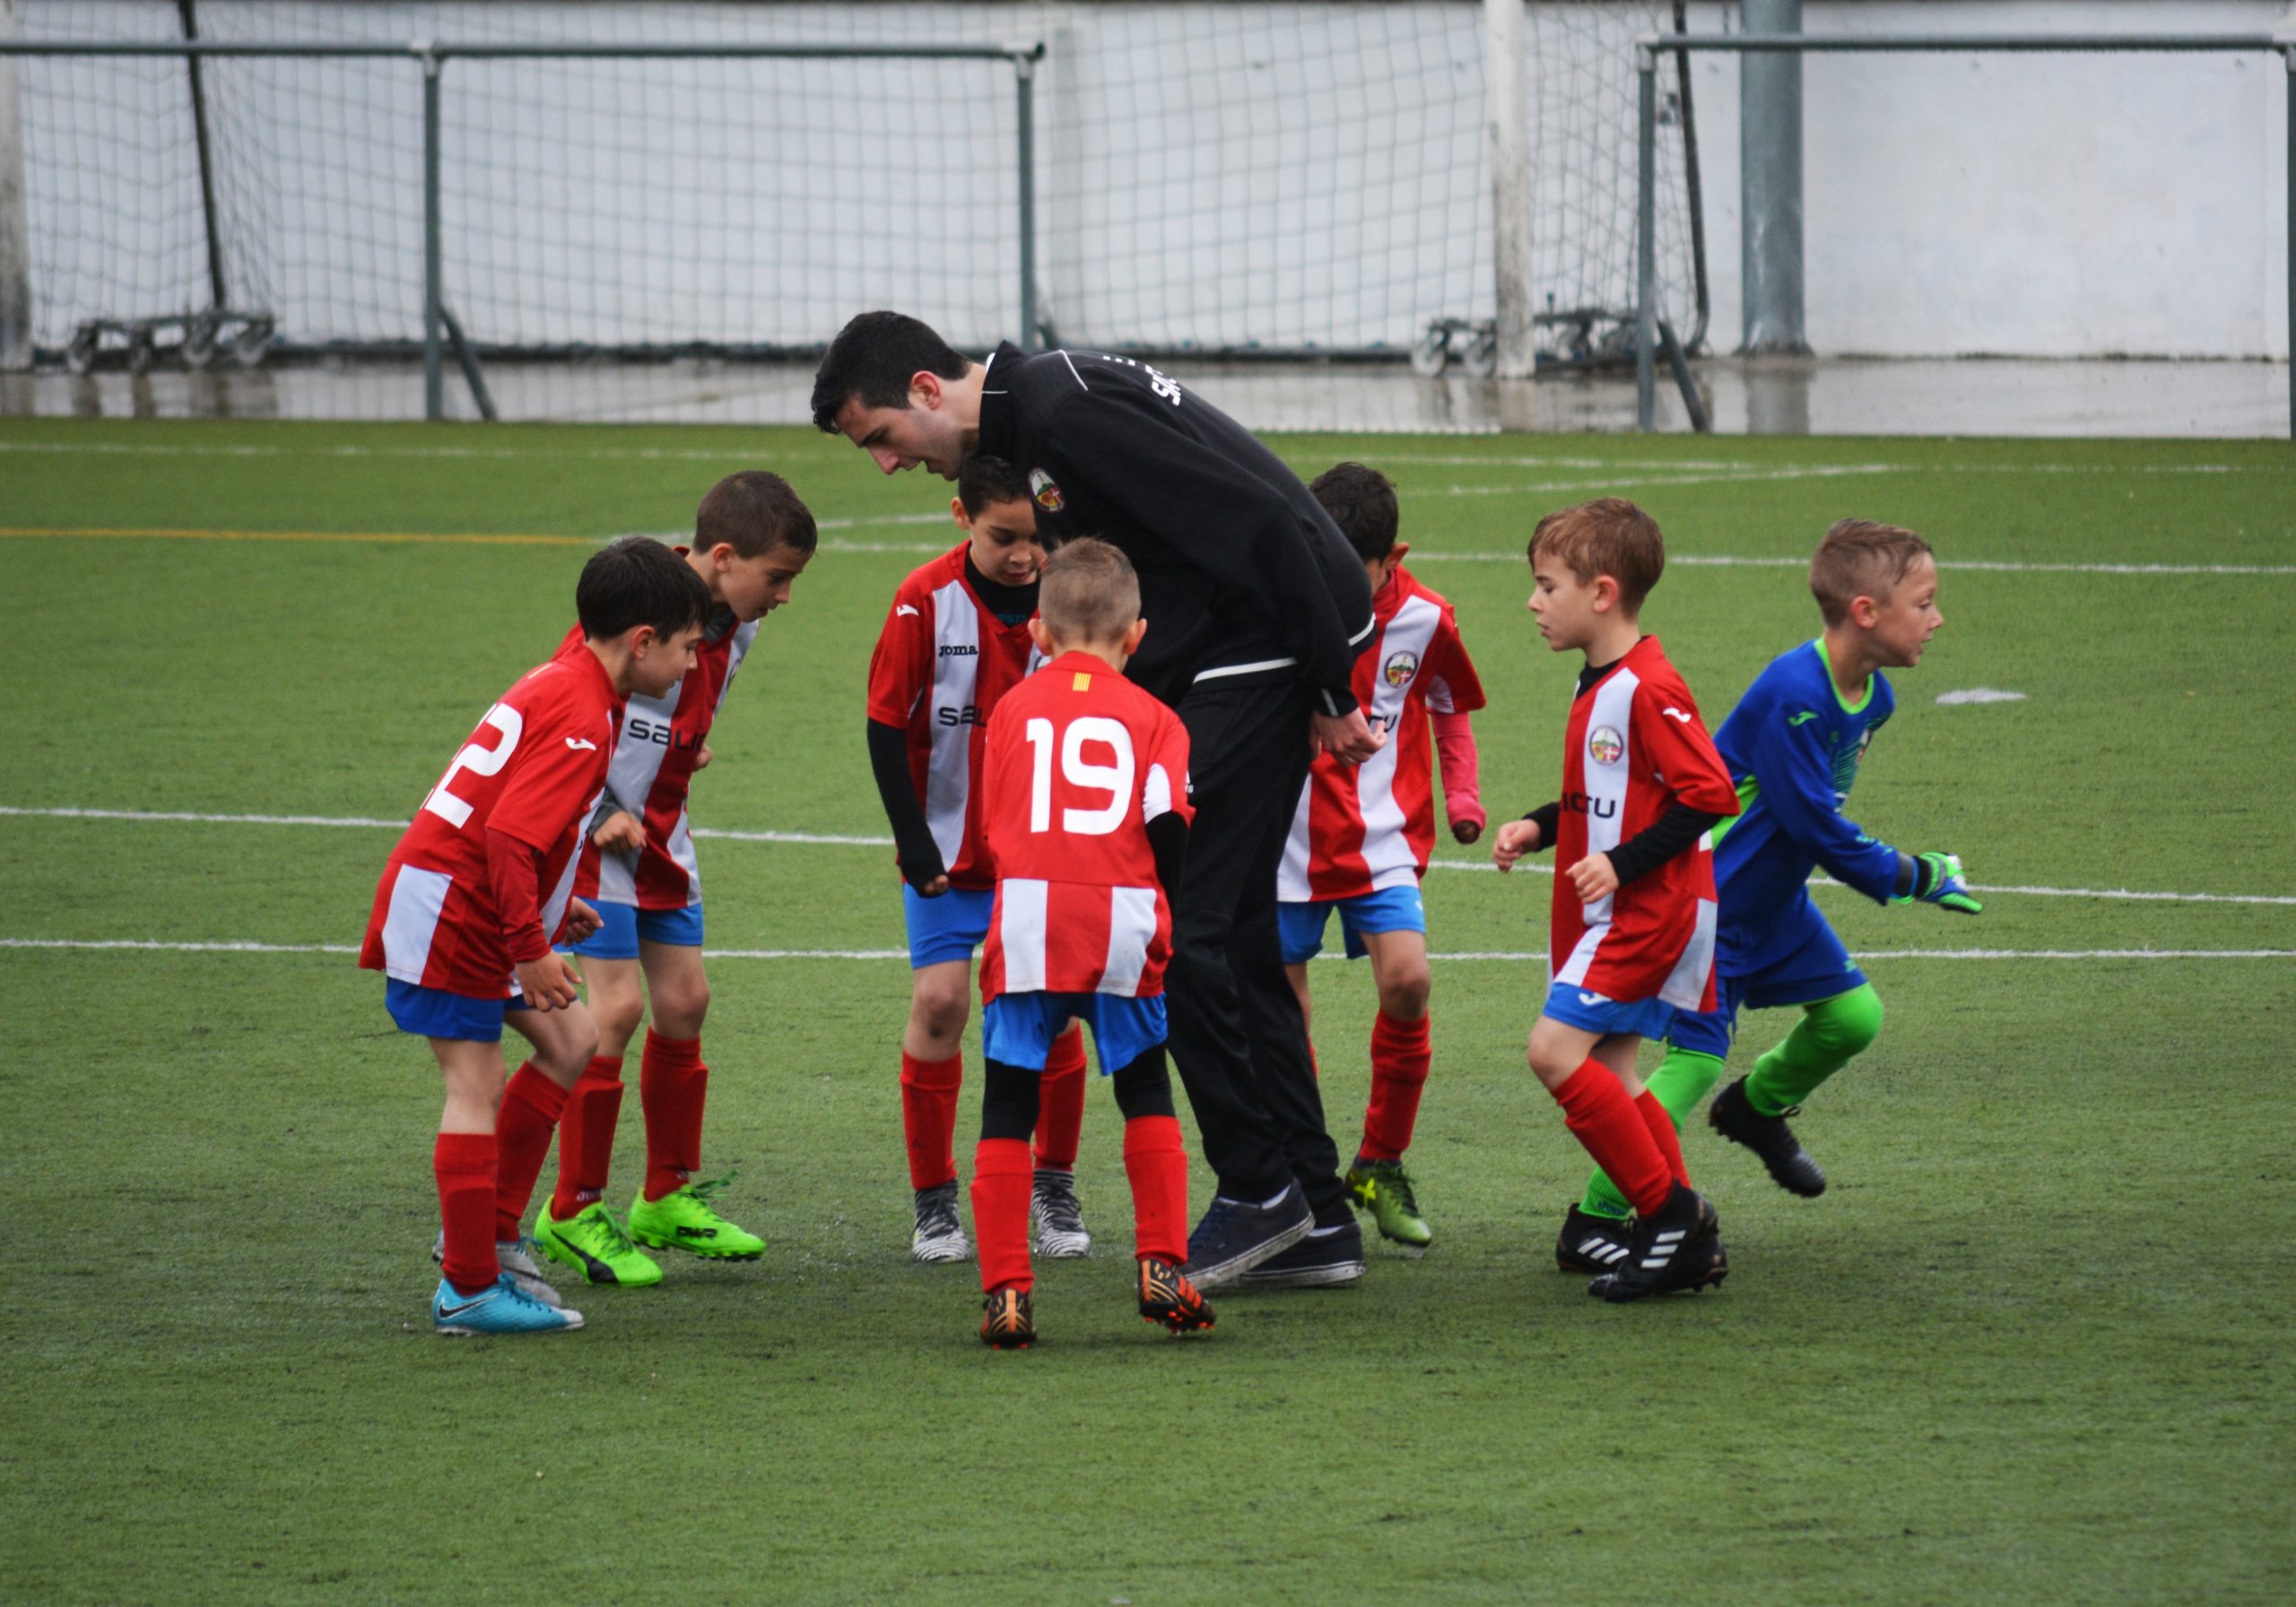 Top 3 tips for helping kids enjoy soccer — Part 1